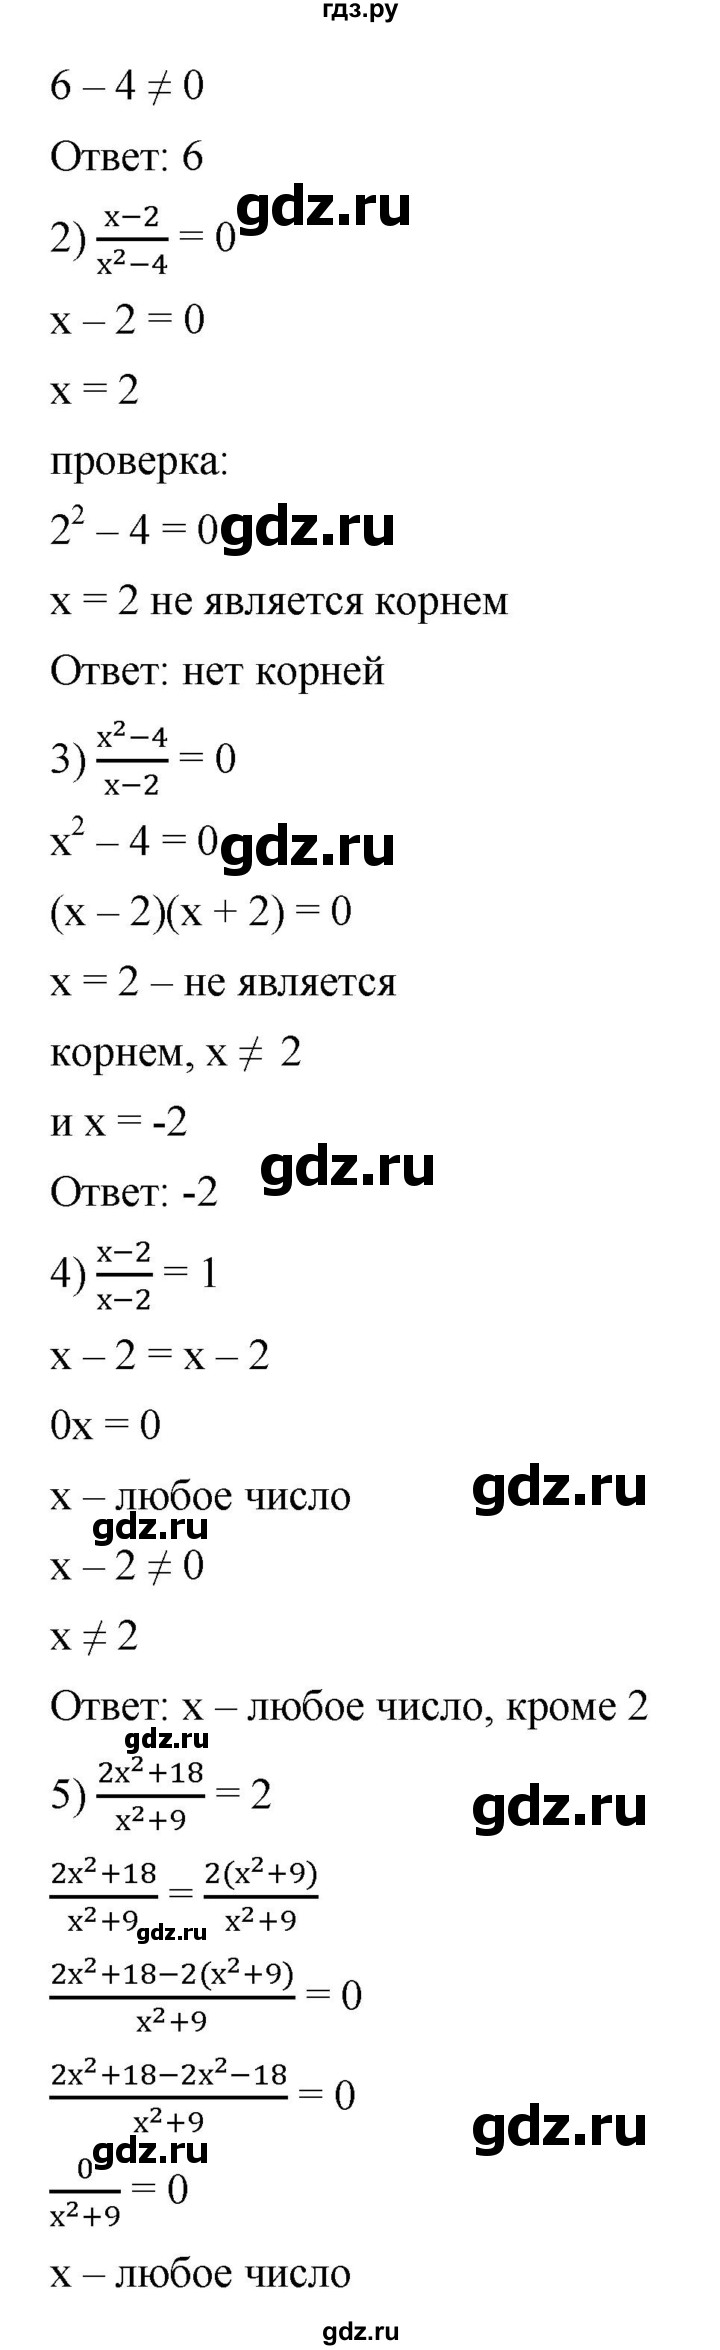 ГДЗ по алгебре 8 класс  Мерзляк   номер - 207, Решебник к учебнику 2019